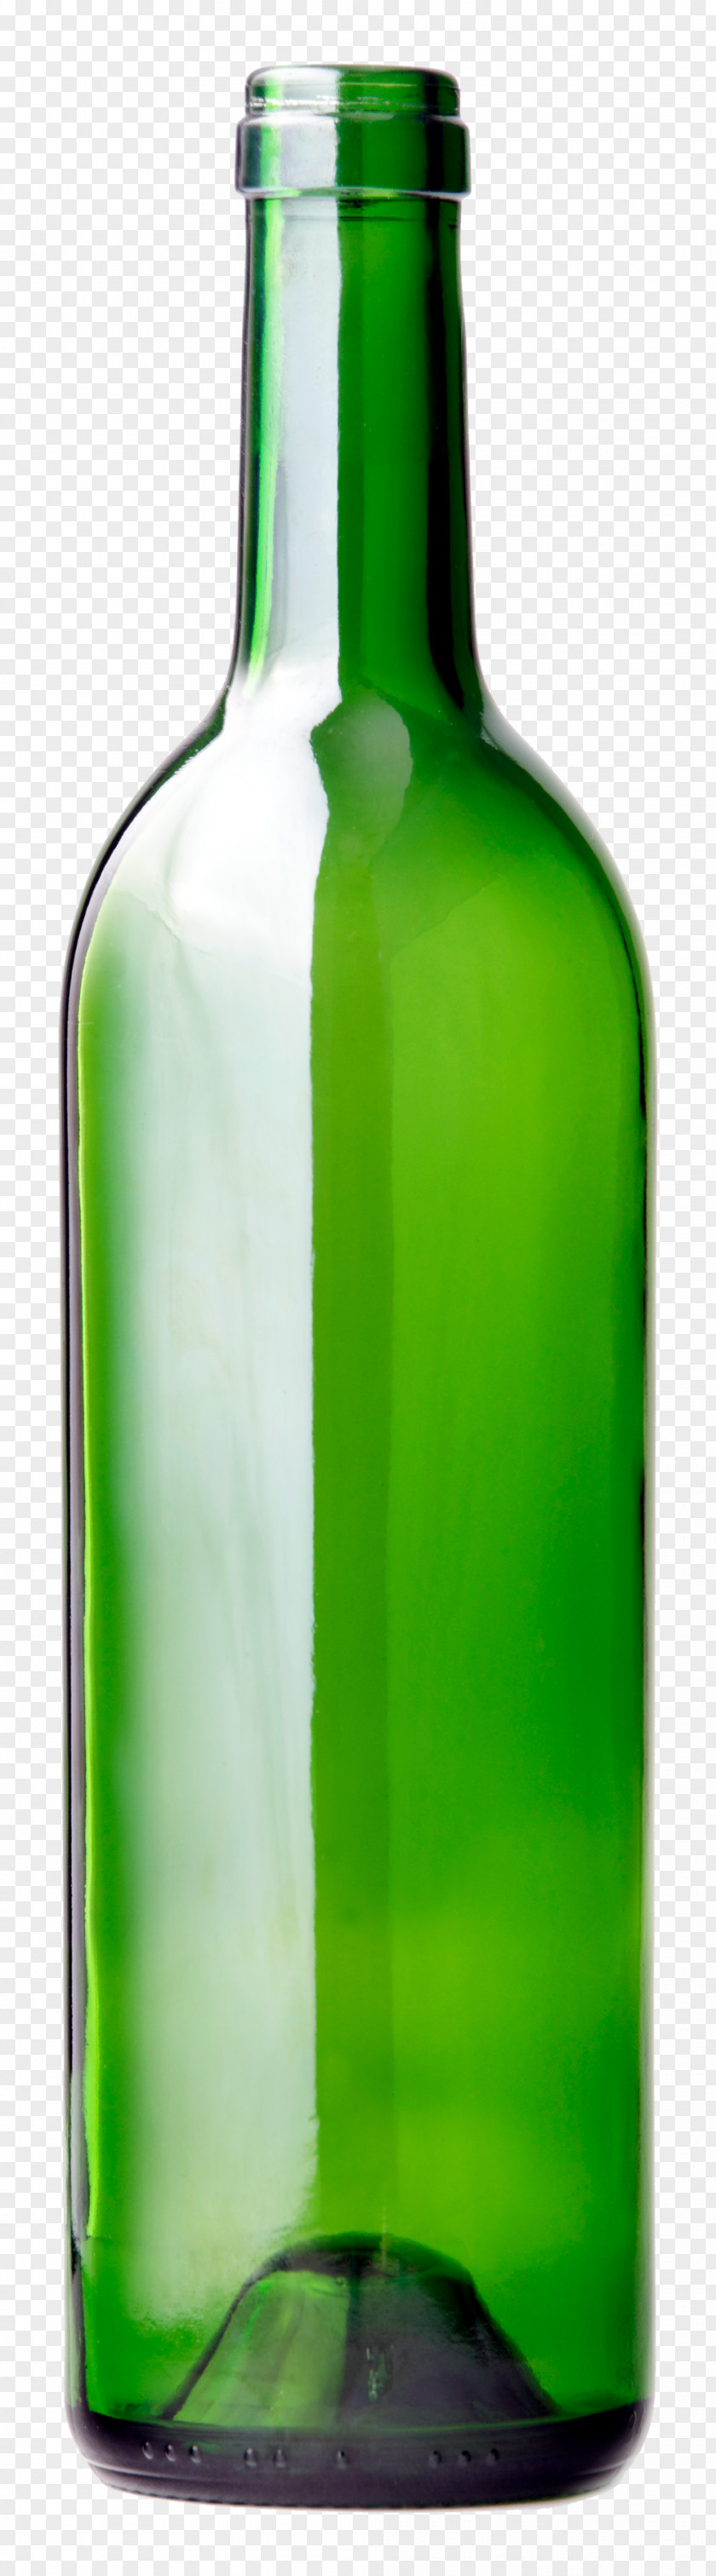 Glass Green Bottle Image Wine Clip Art PNG